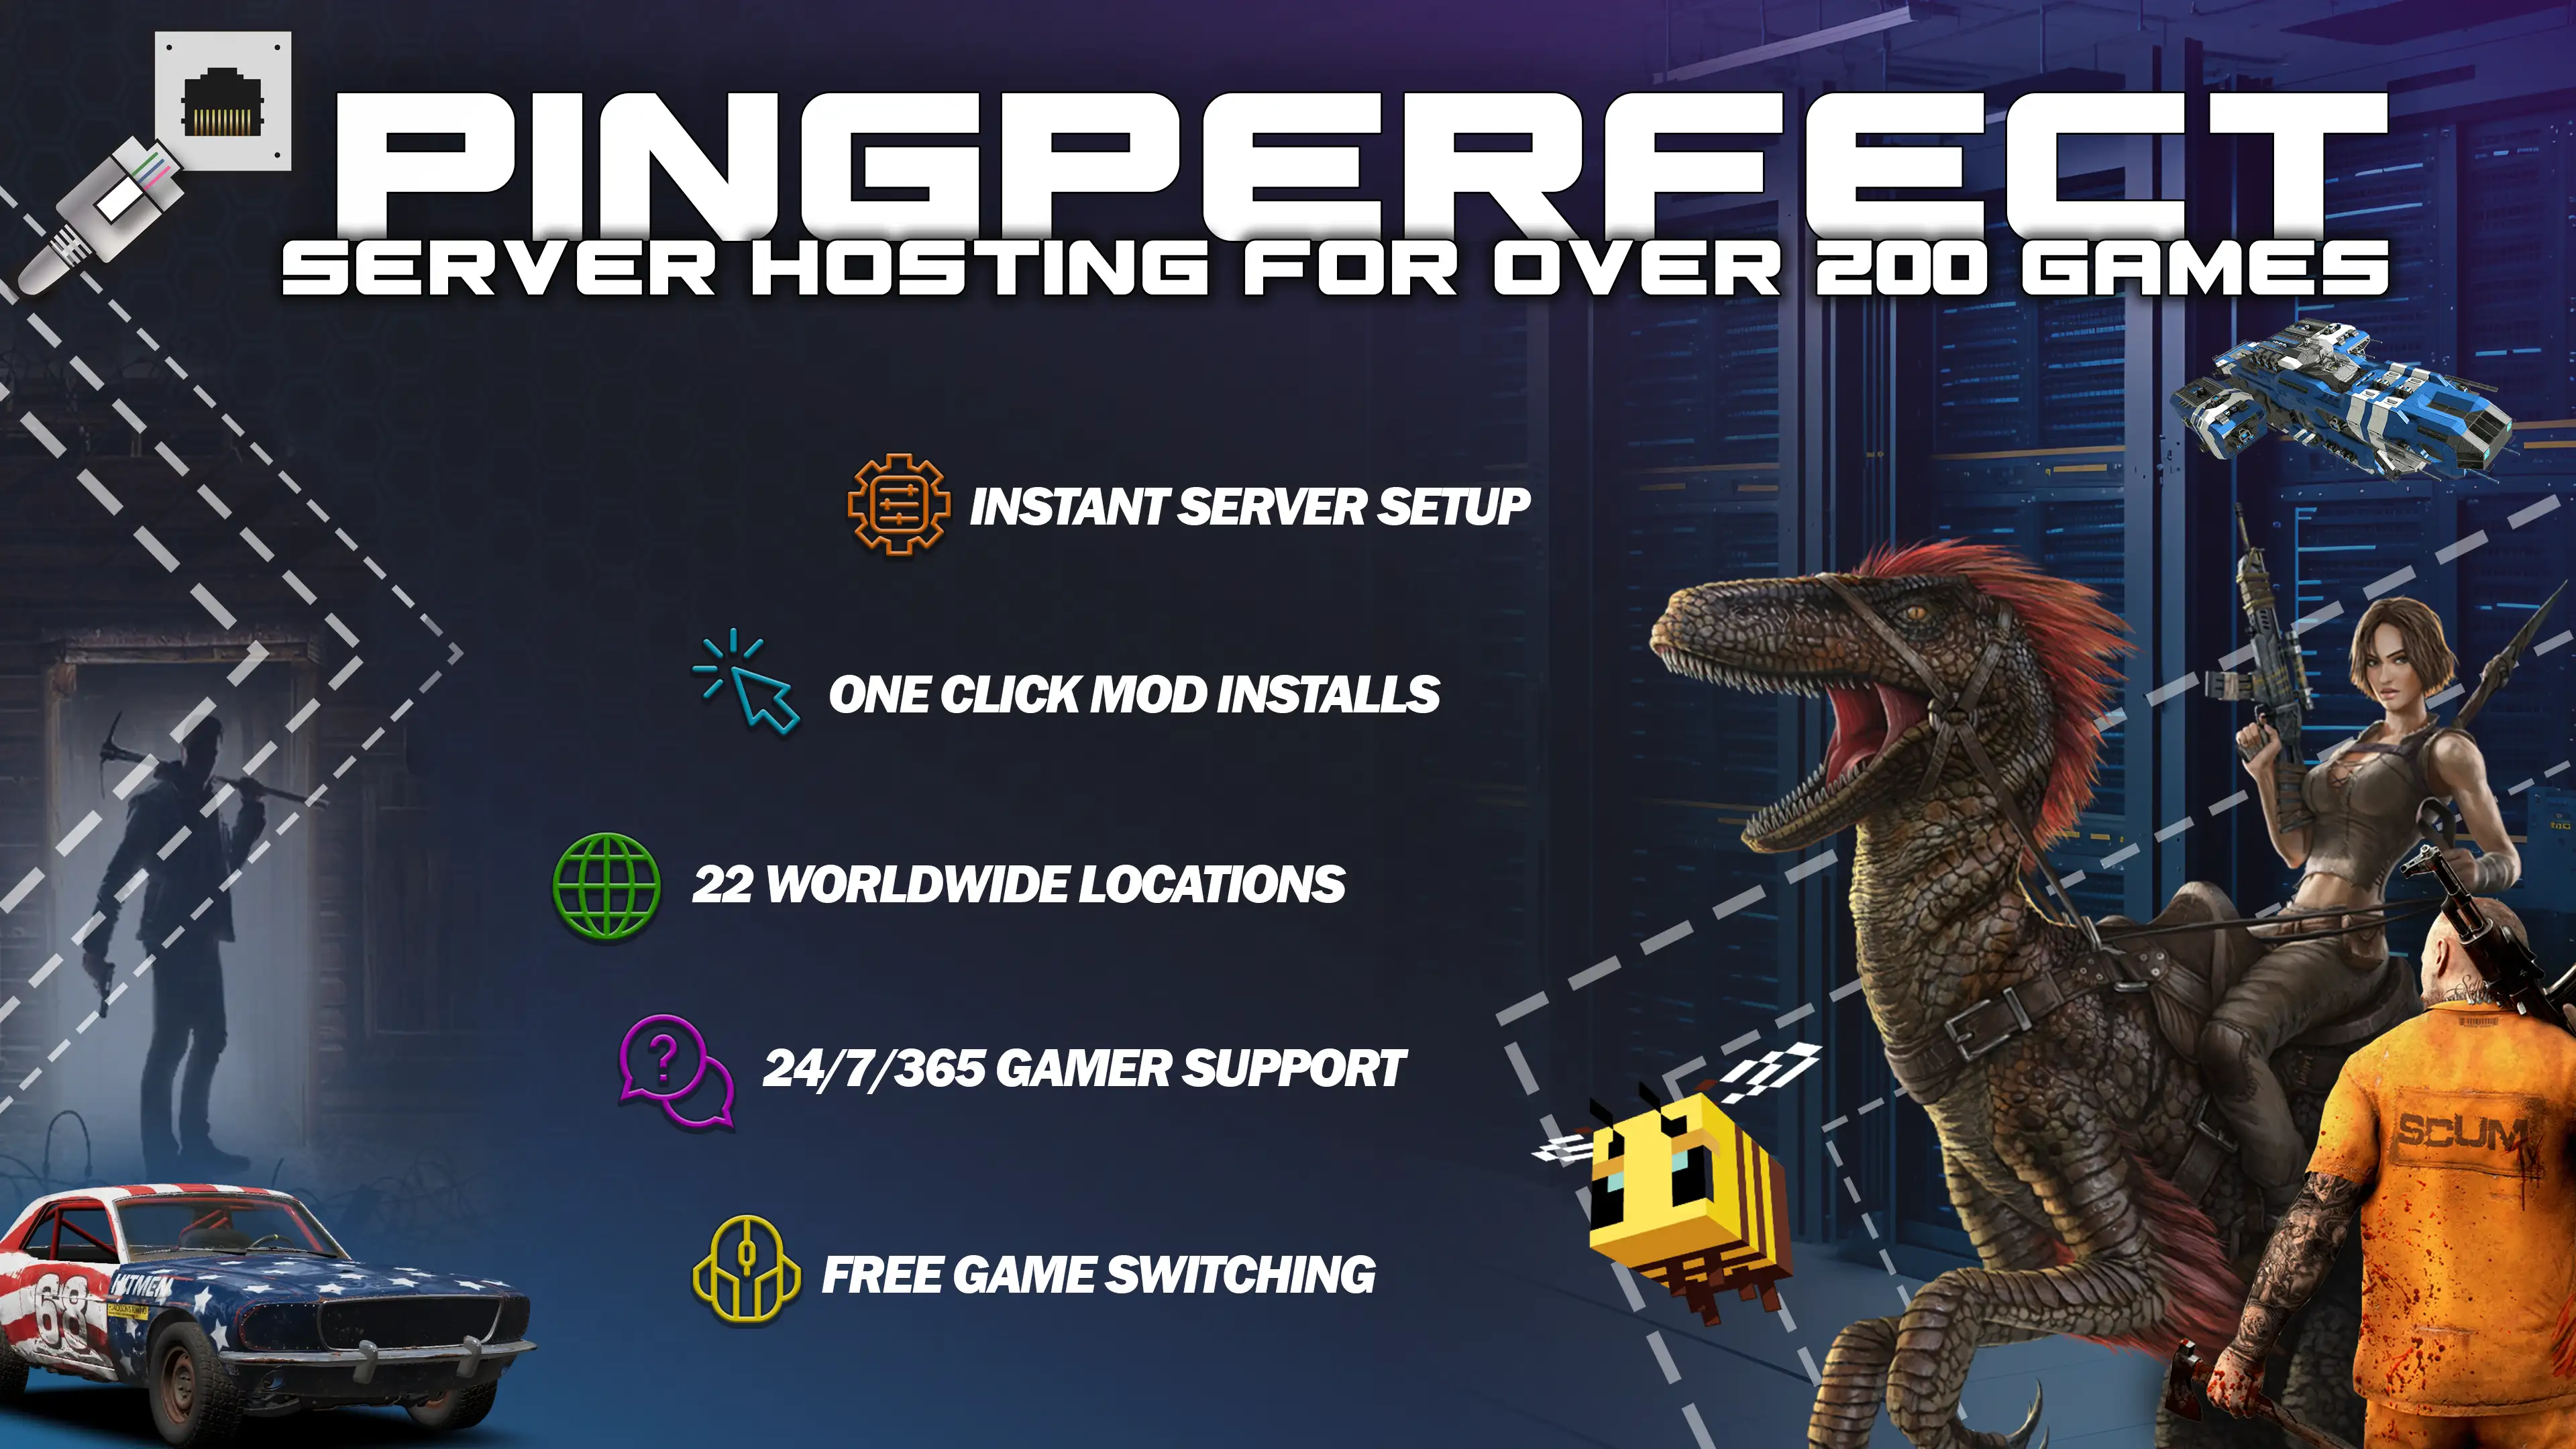 Game server hosting – Counter-Strike: Condition Zero